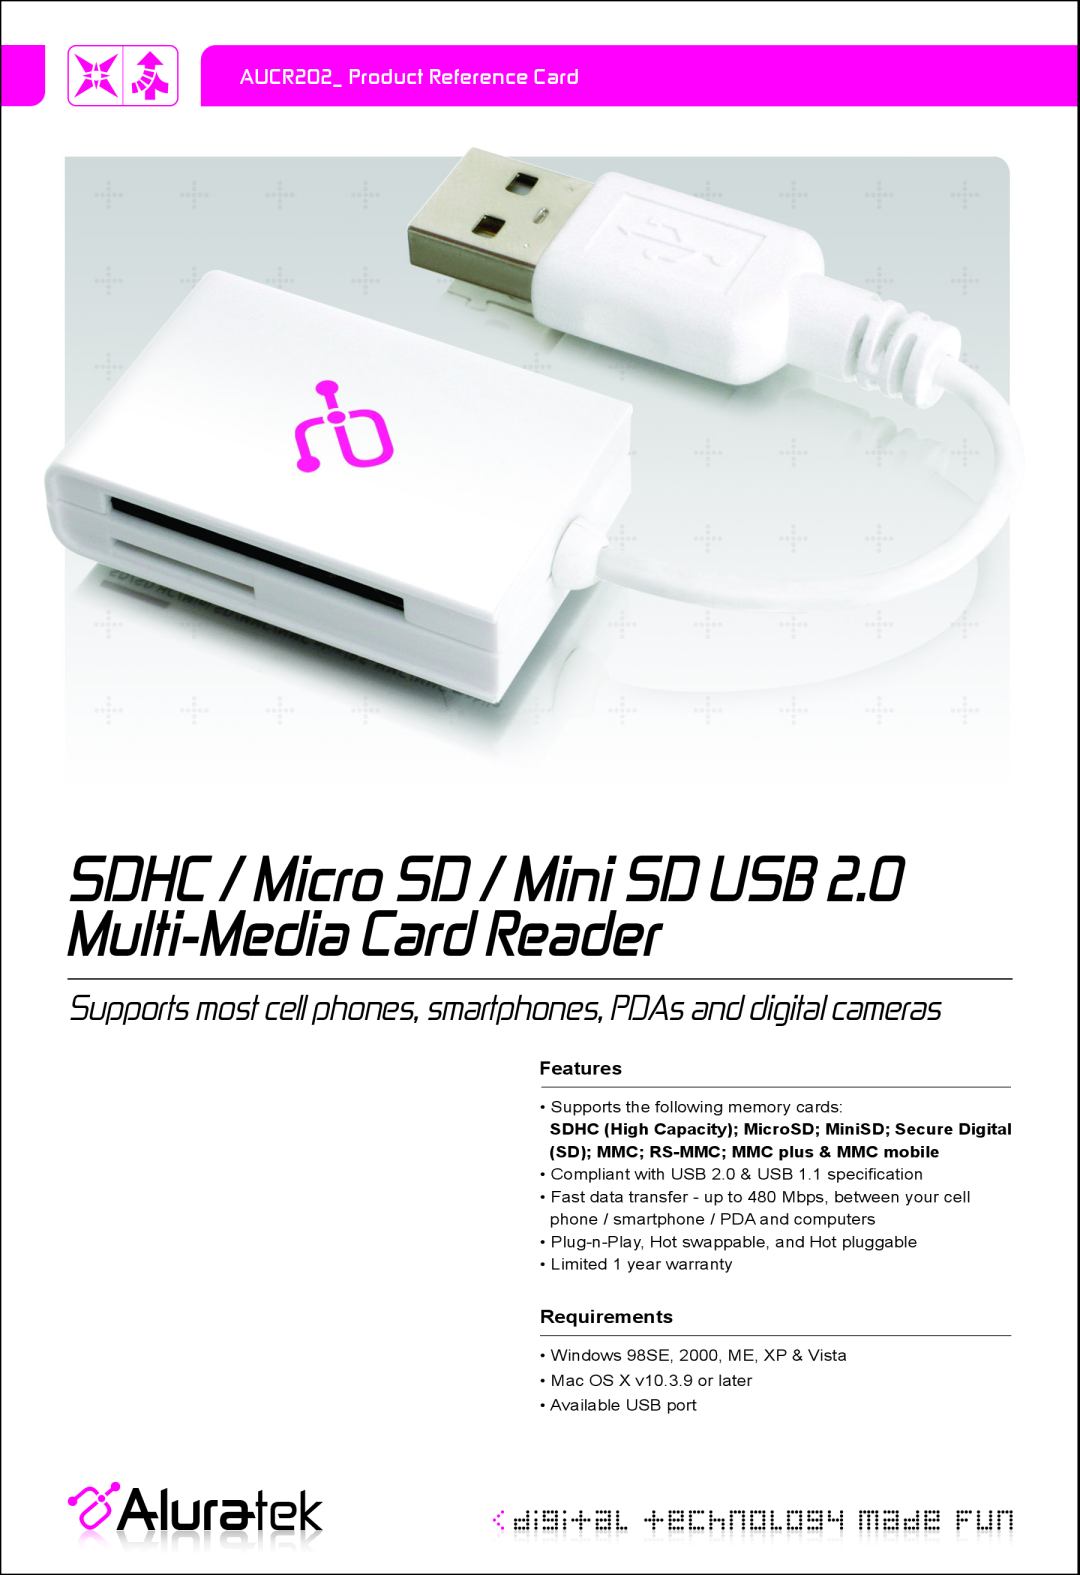 Aluratek warranty SDHC / Micro SD / Mini SD USB 2.0 Multi-Media Card Reader, Features, Requirements 